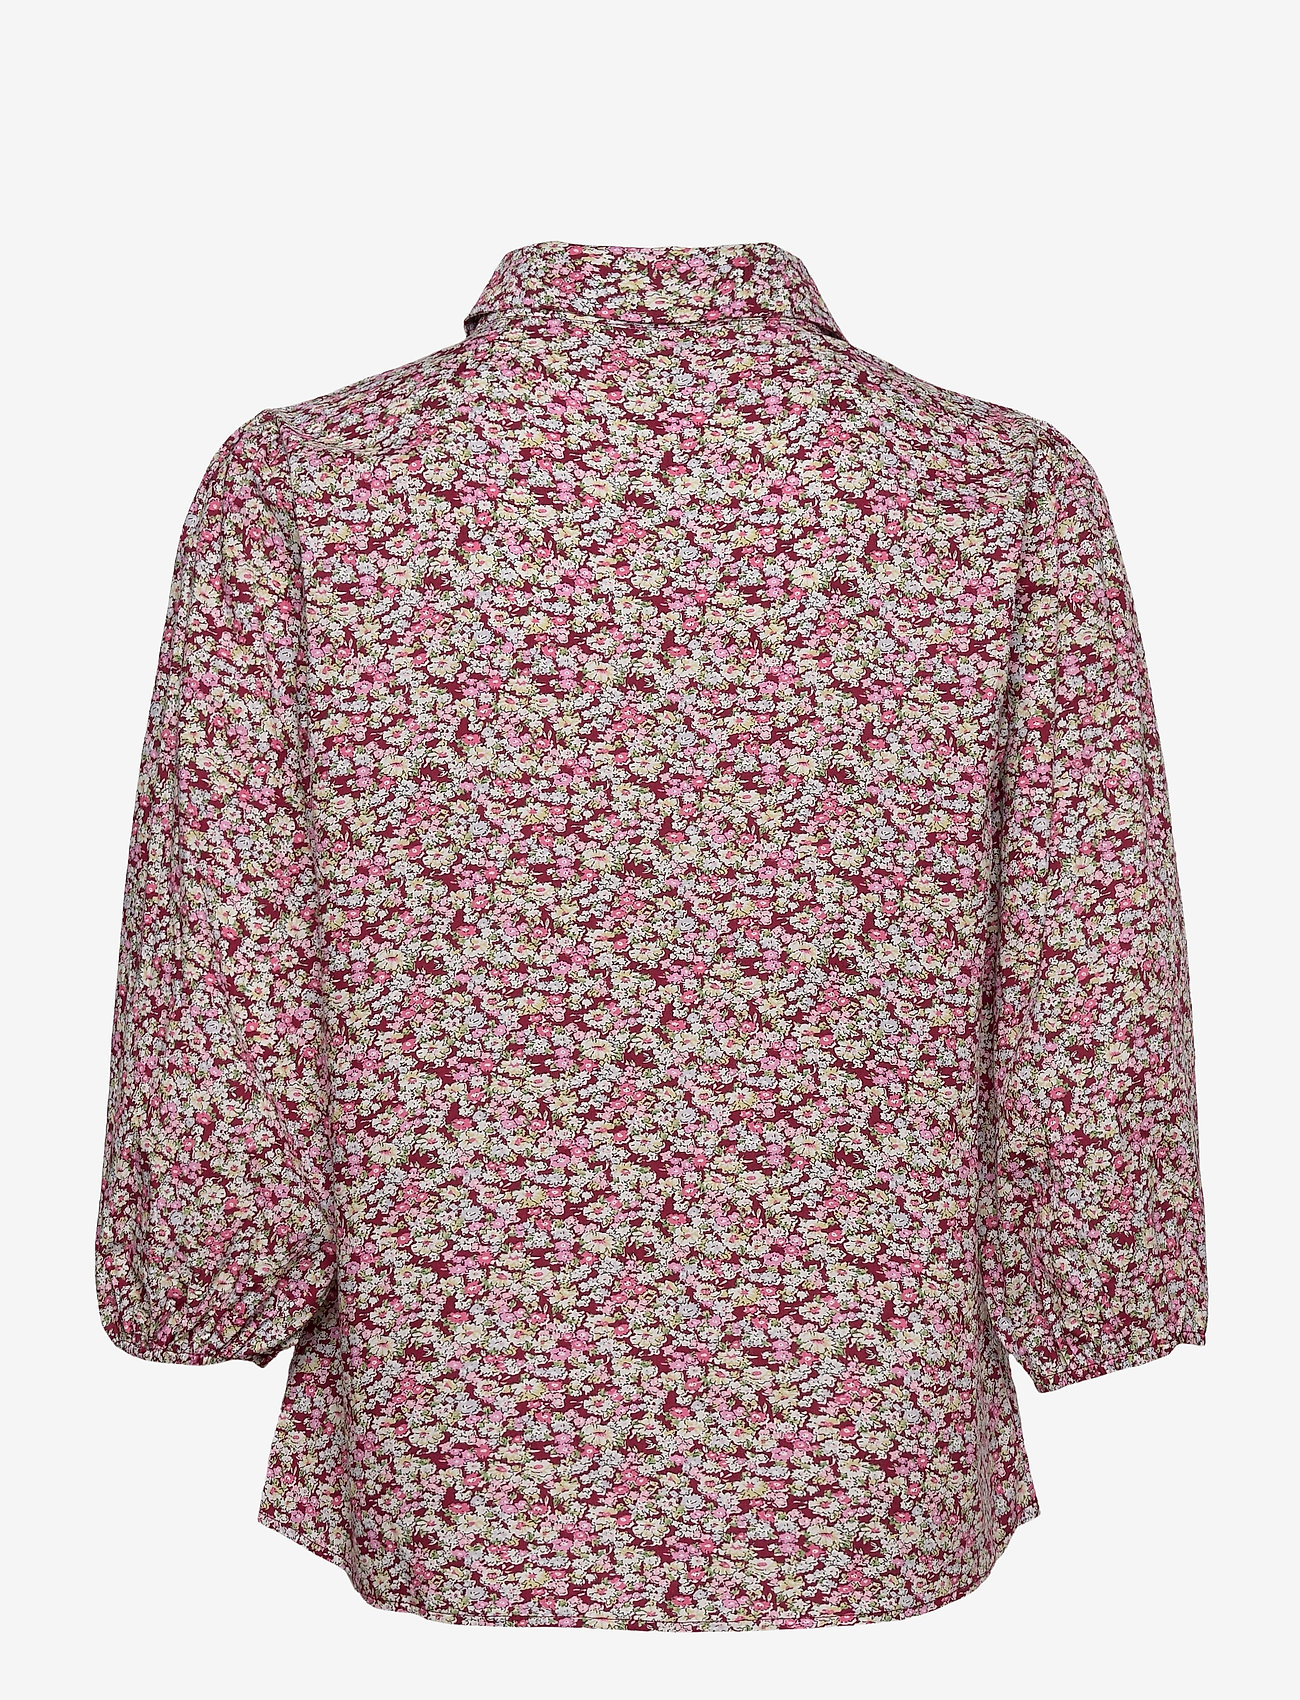 Minus - Rasmina shirt - langærmede skjorter - pink flower print - 1